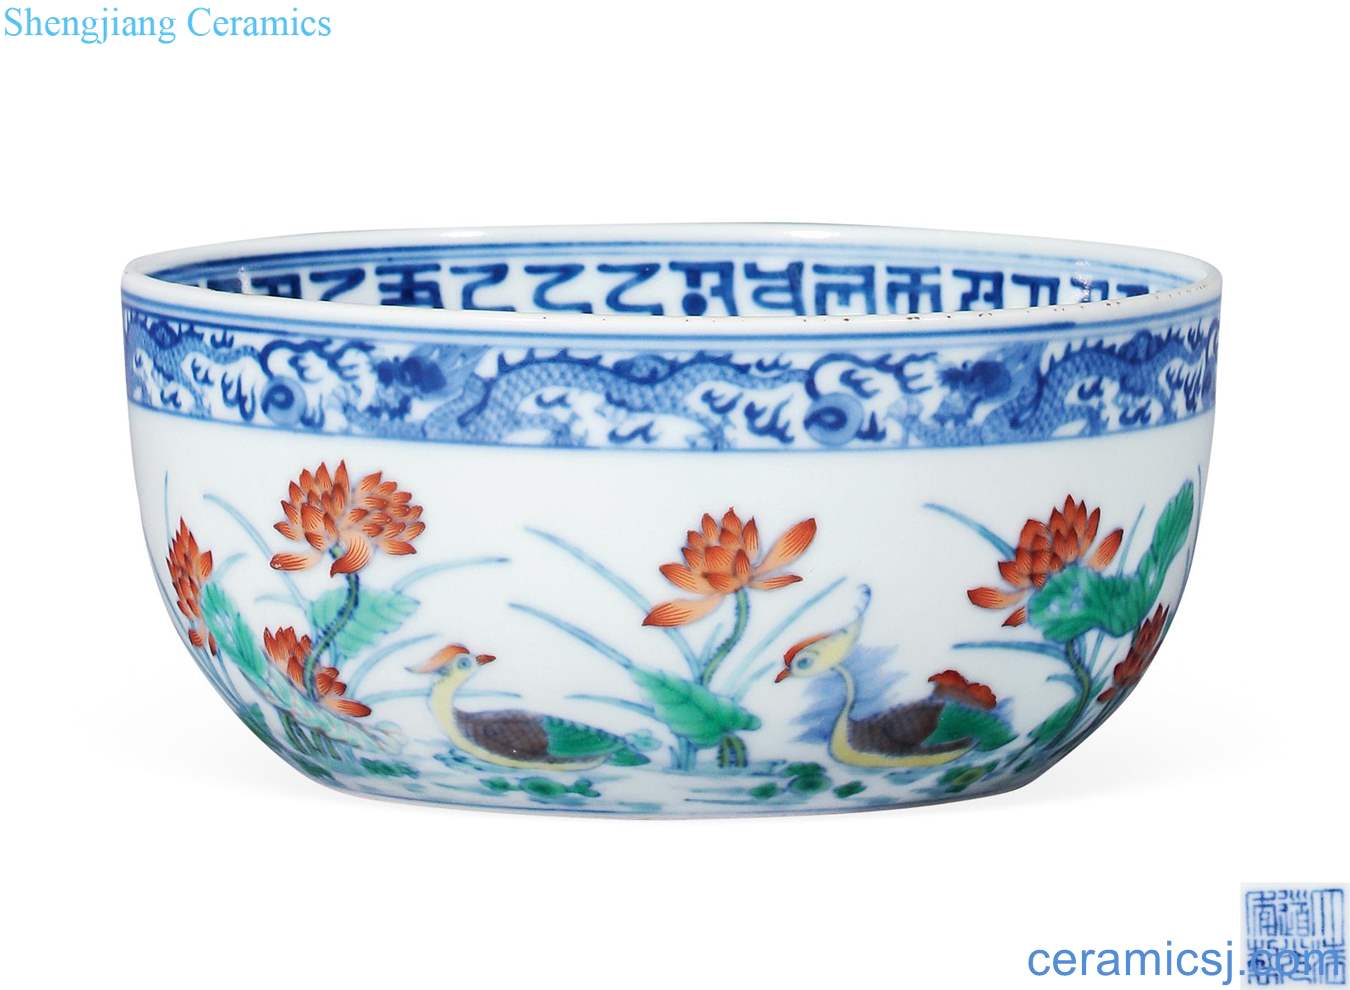 Qing daoguang bucket color lotus pond yuanyang lines, bowl